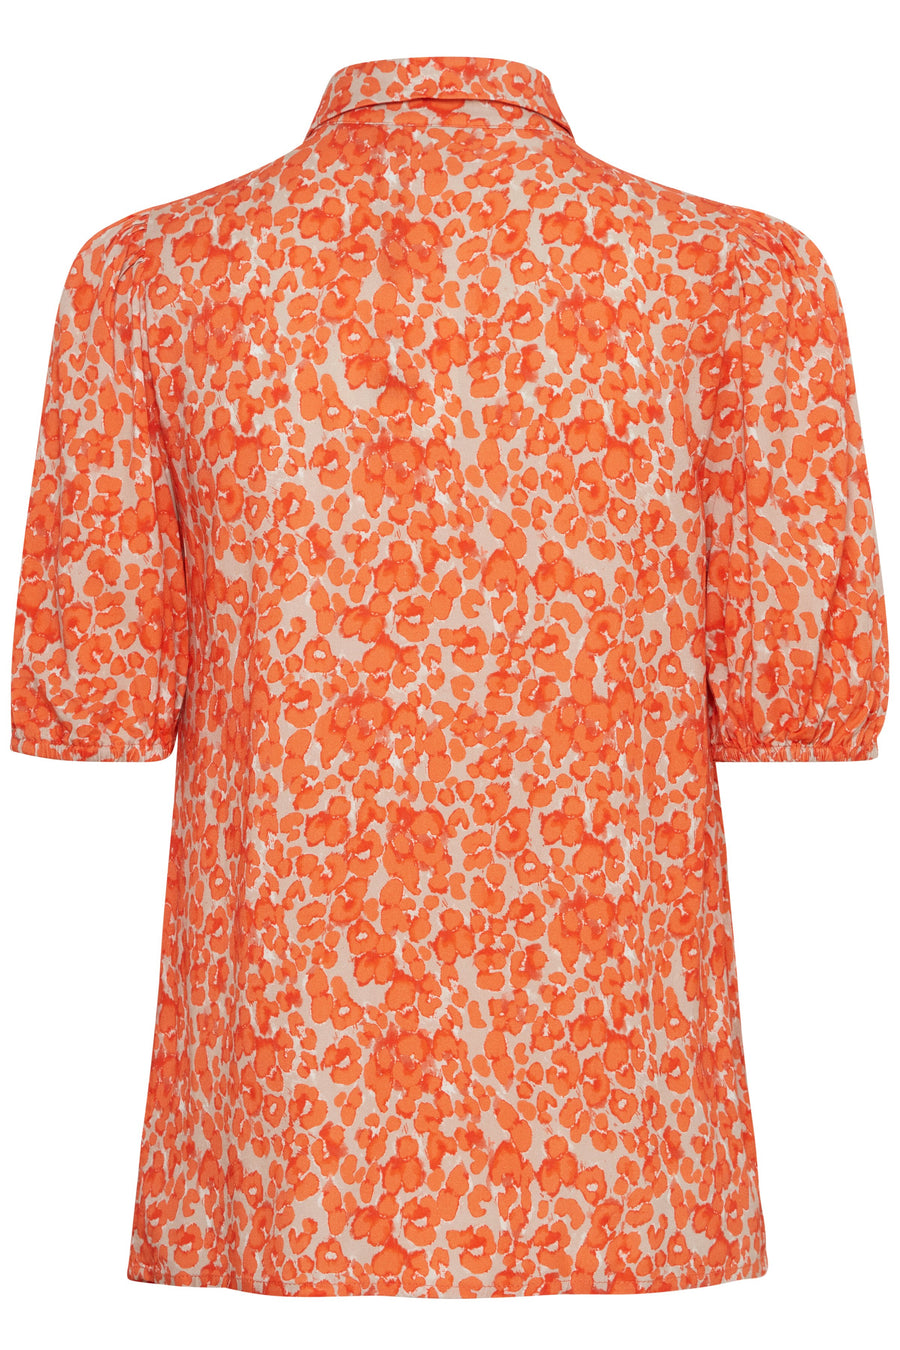 Aya Shirt in Coral Rose